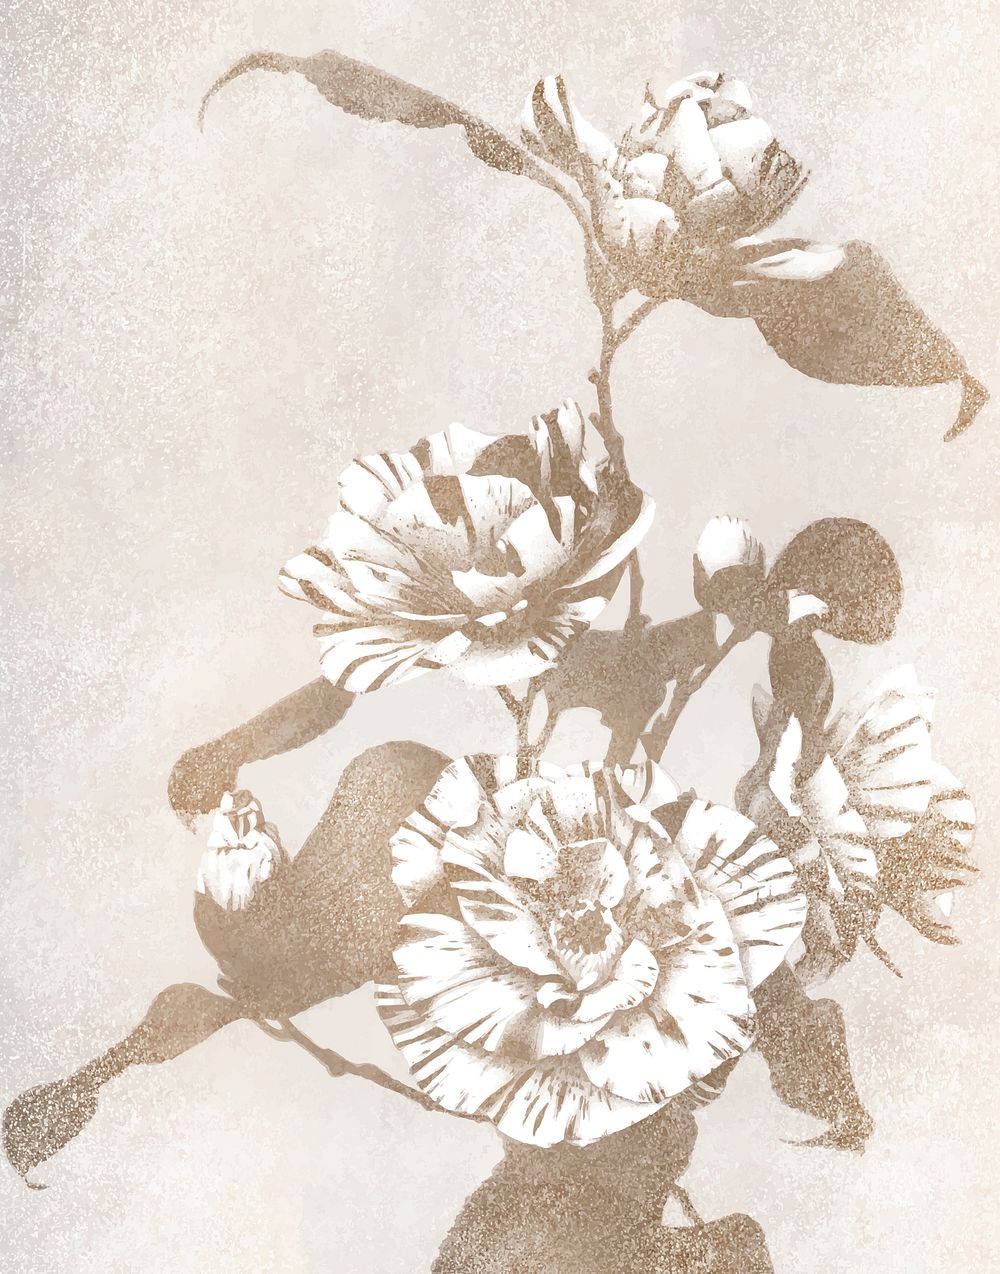 Sepia striped Camellias vintage vector artwork, remix from orginal photography.